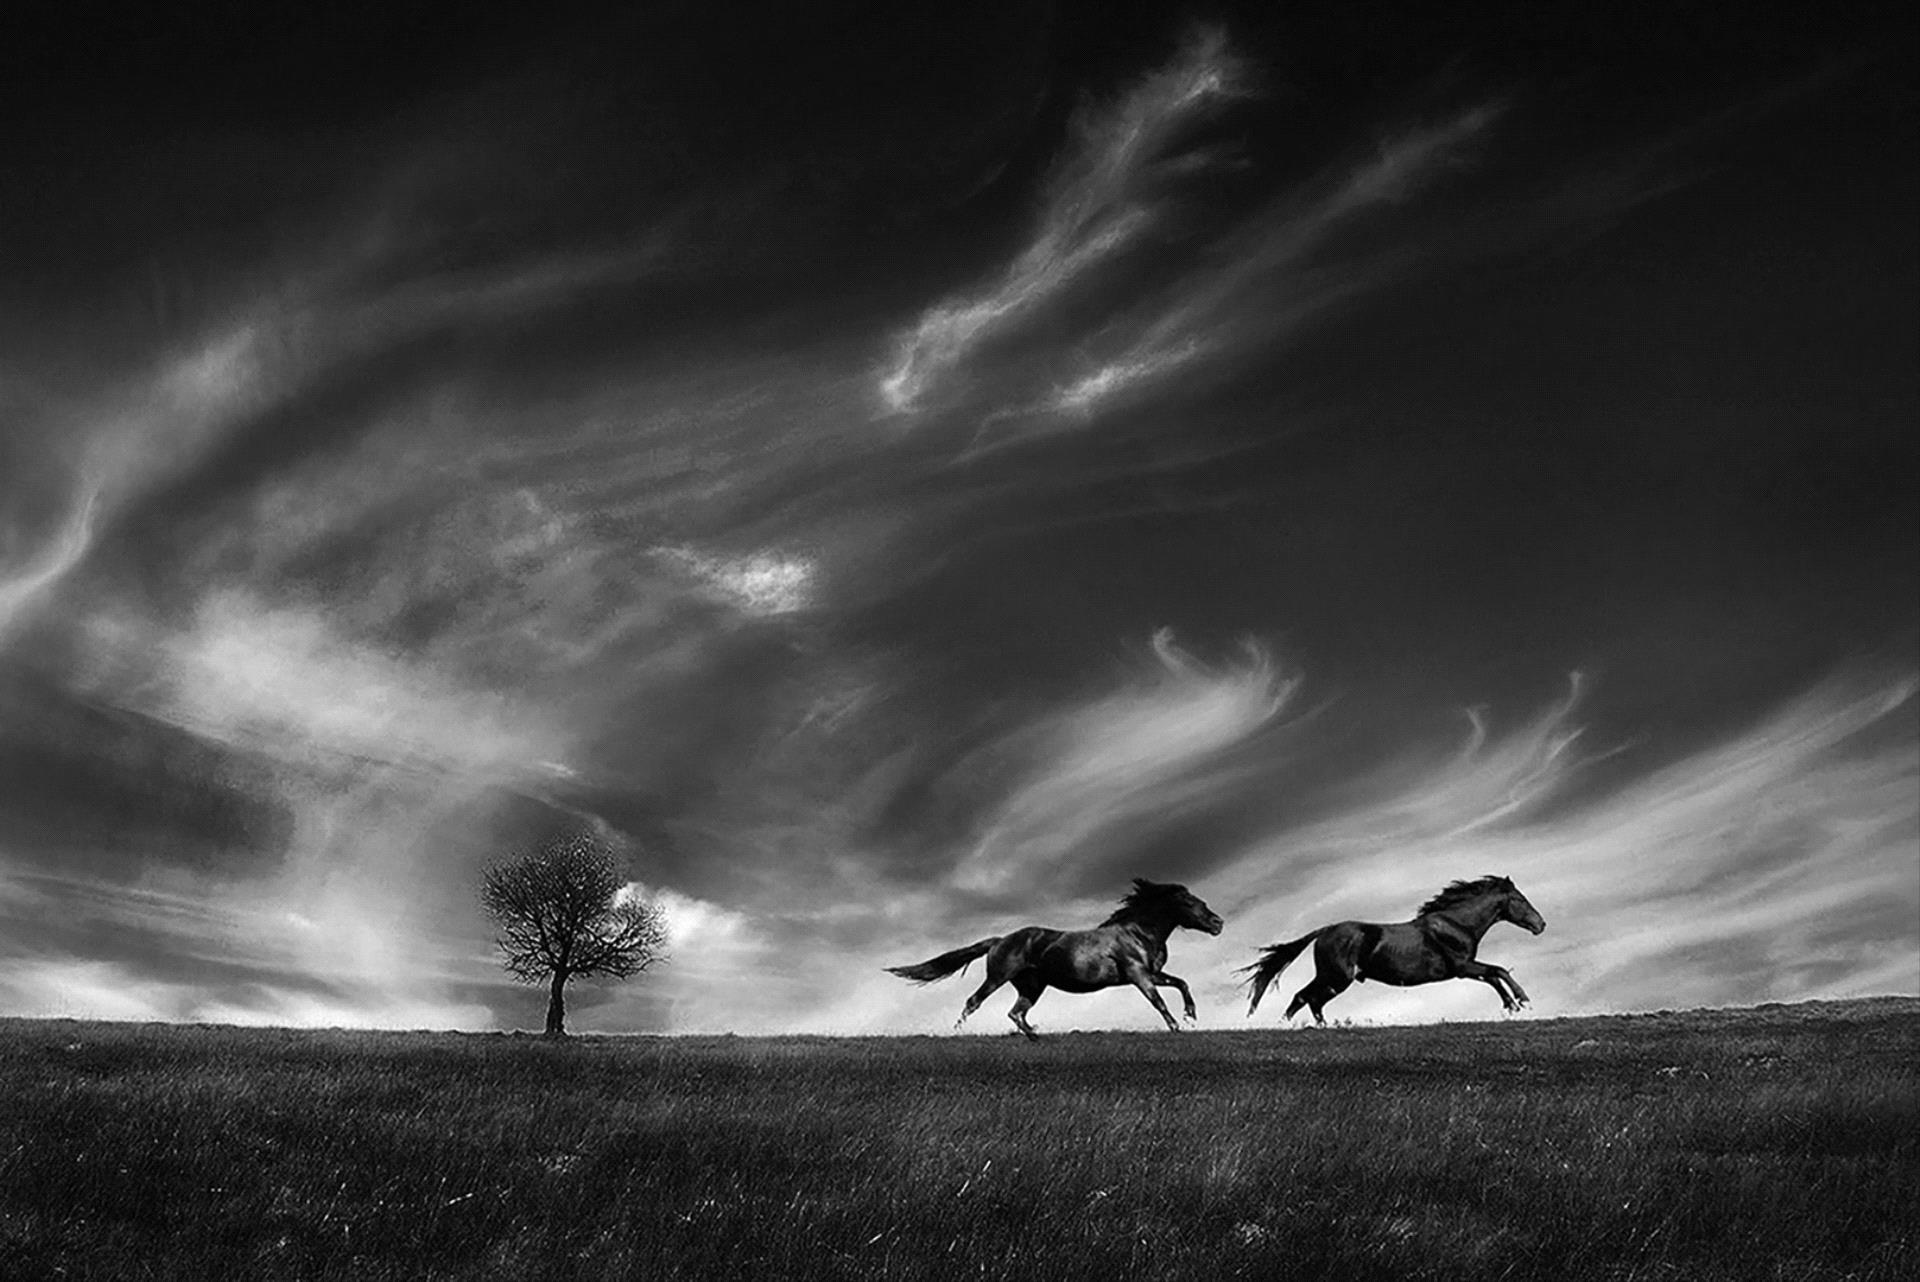 Golden Dragon Photo Award - Lajos Nagy (Romania) - Running With The Wind